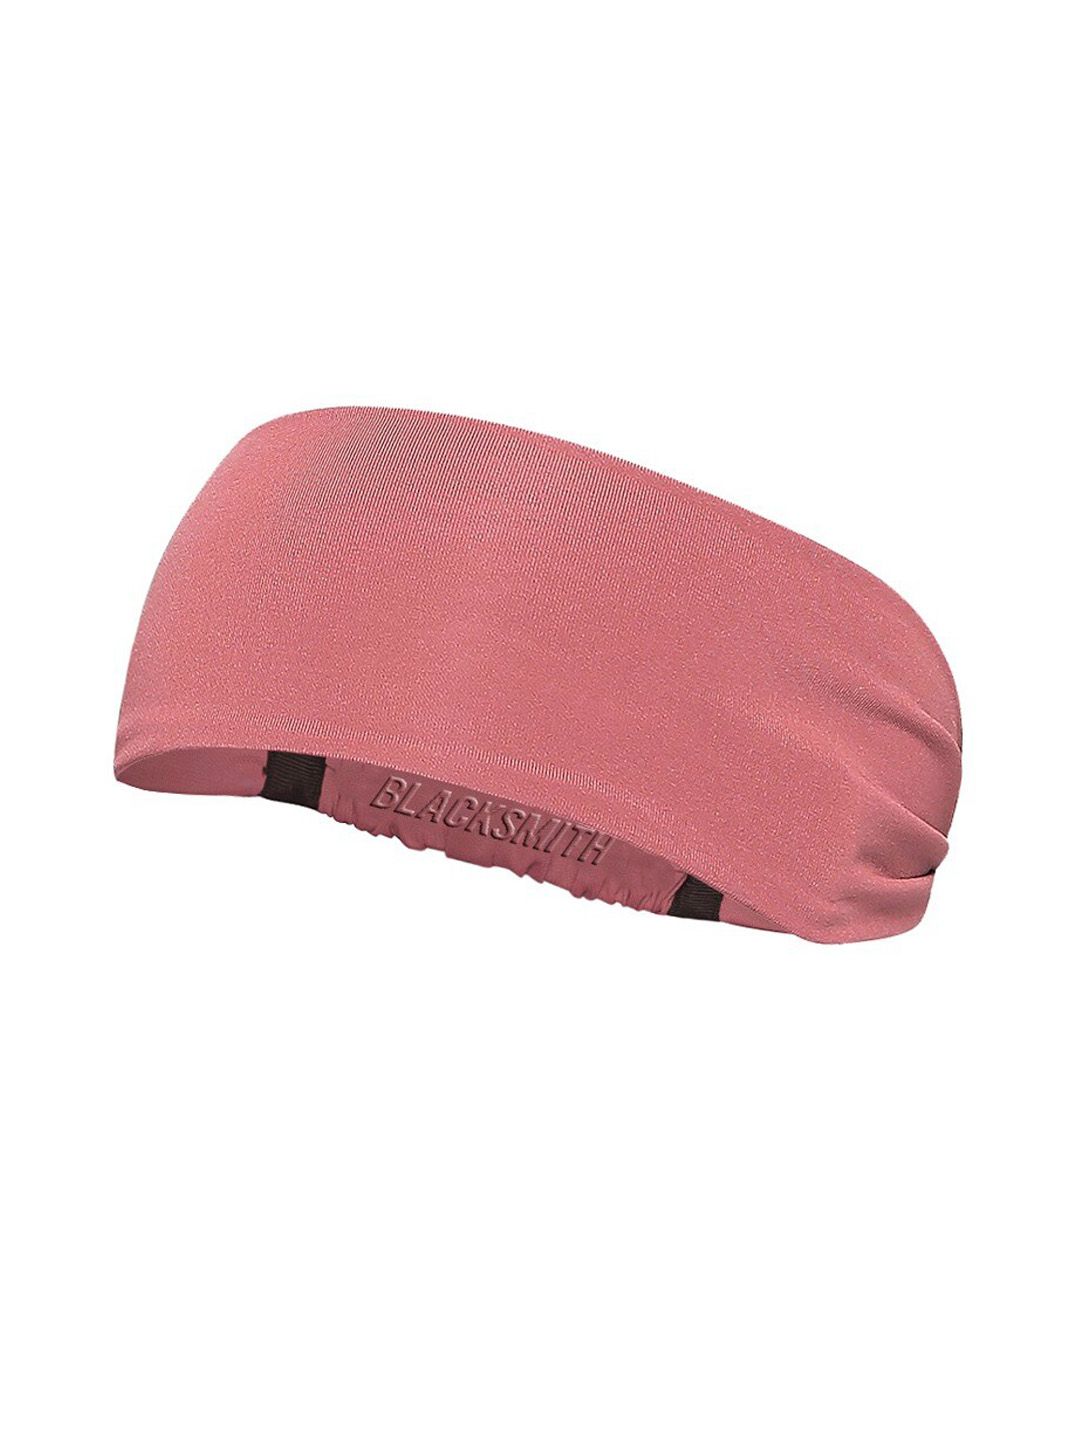 Blacksmith Unisex Pink & Black BLSM Sports Headband Price in India